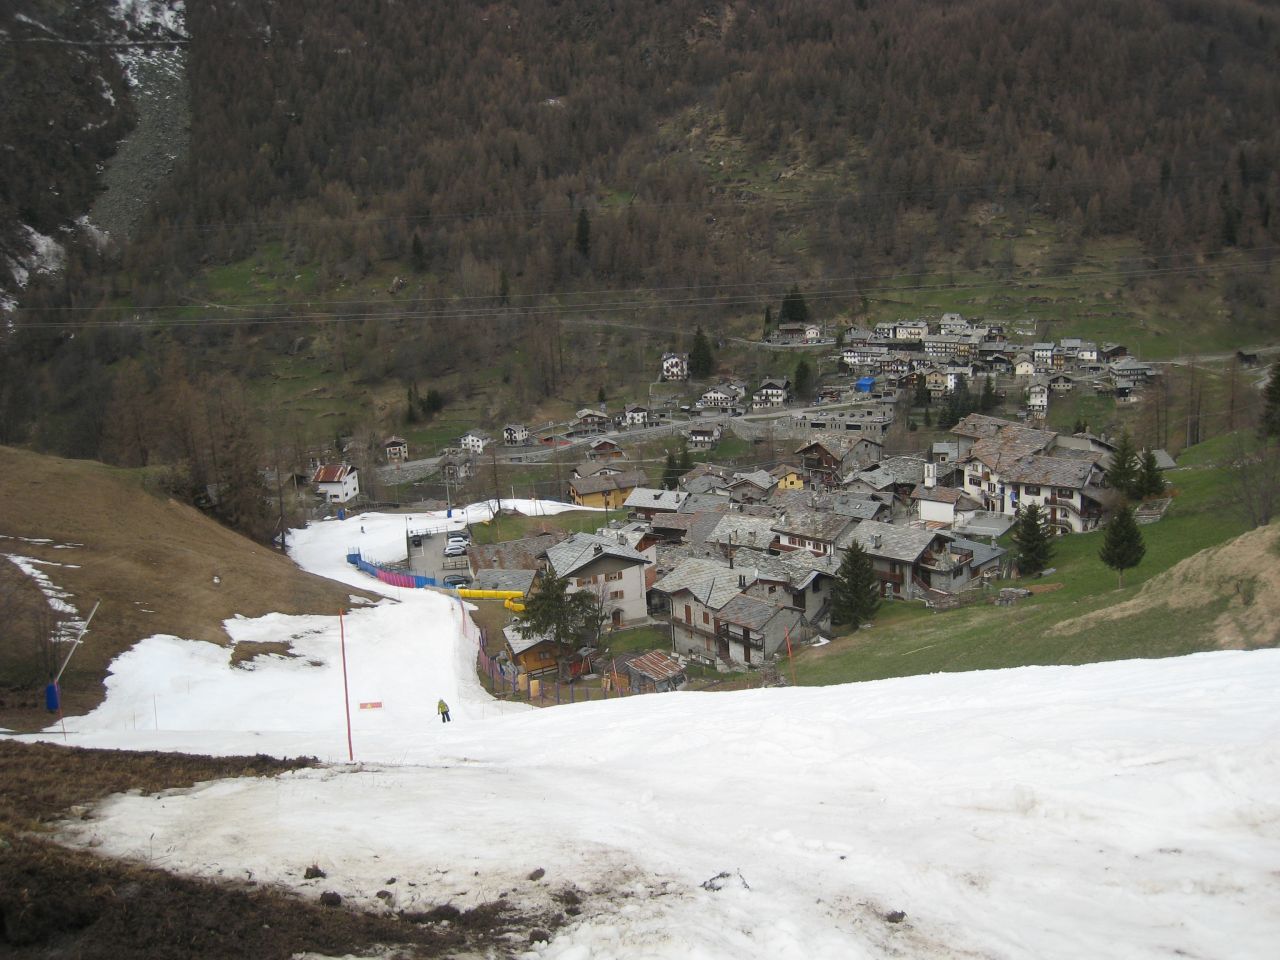 /photos/2012/S16_Zermatt/120407-1148-S16-MD-24.jpg